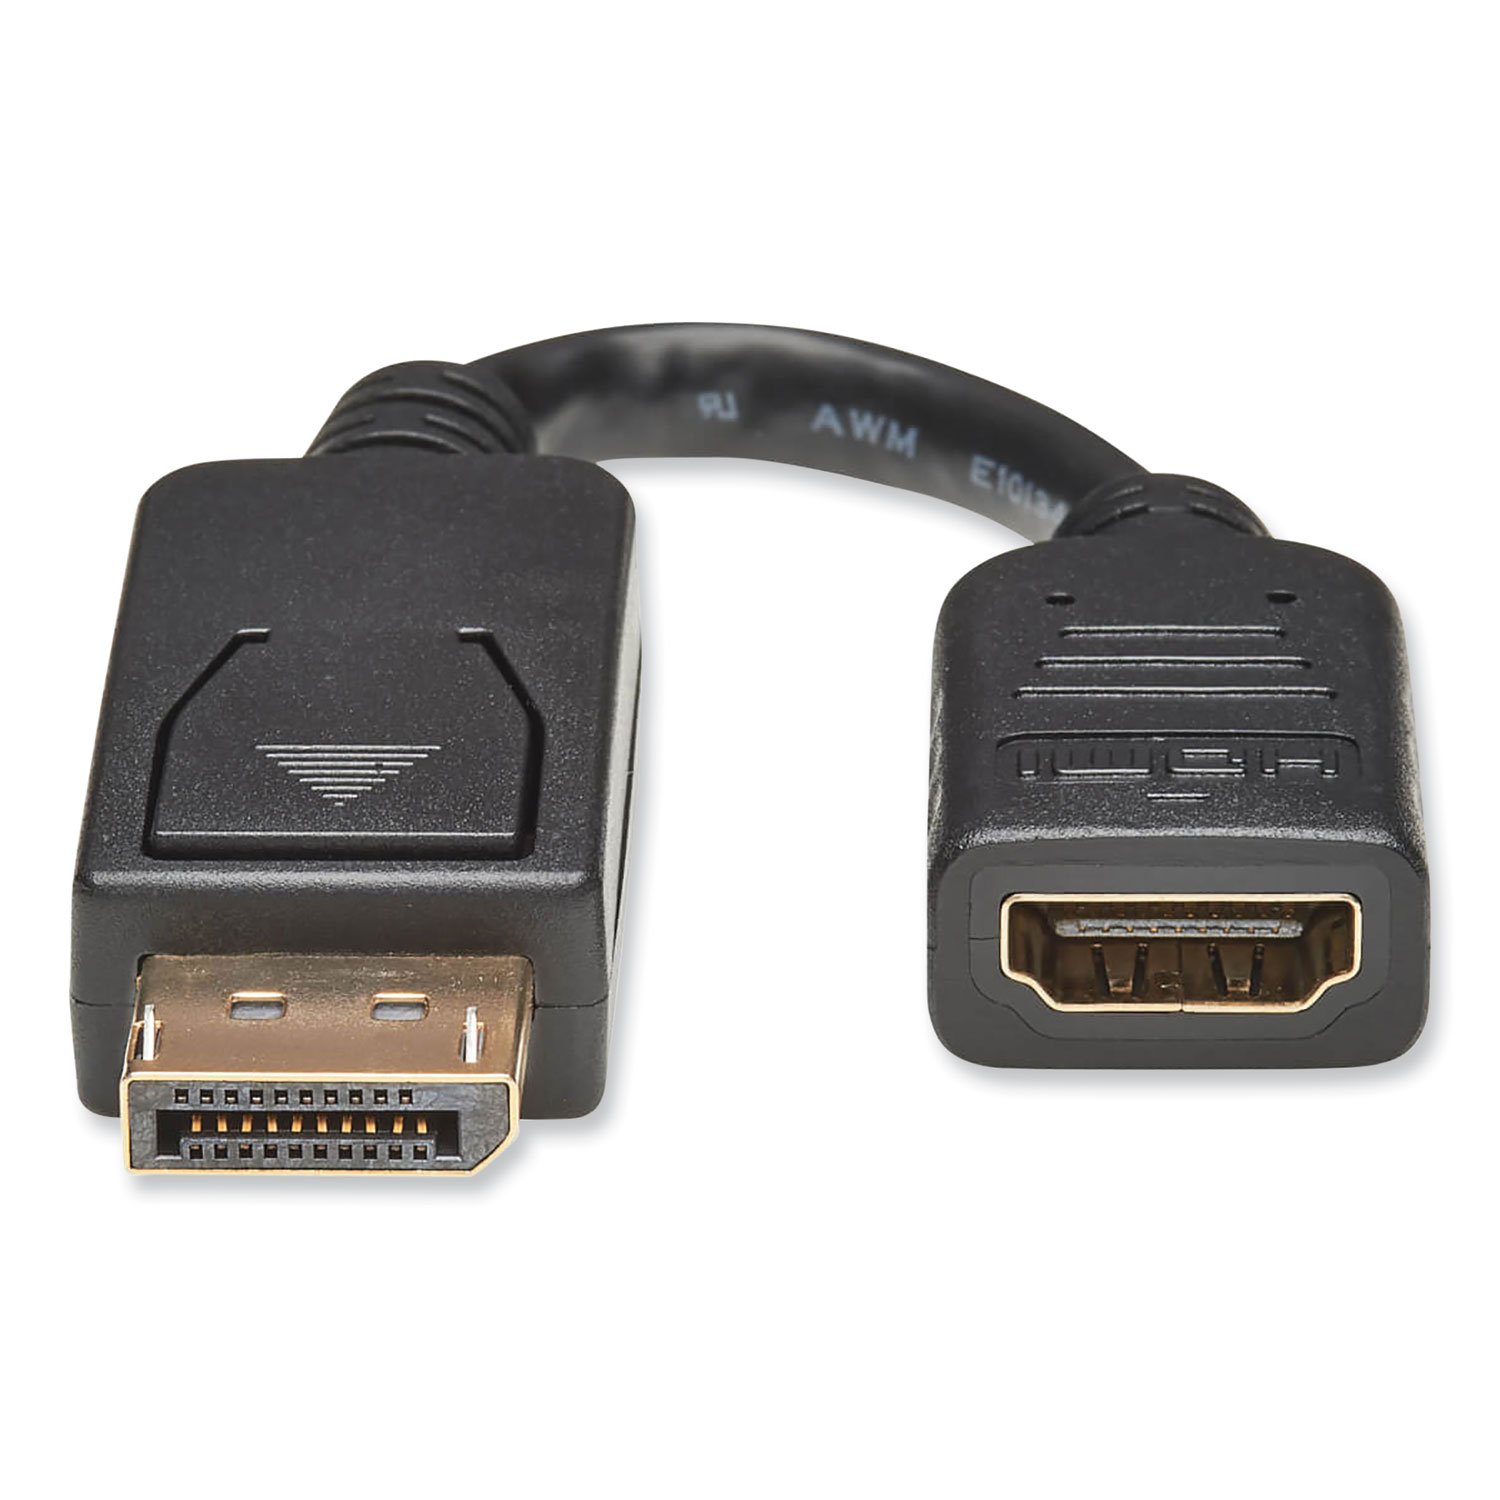 Tripp Lite DisplayPort to HDMI Adapter Converter Cable, 6', Black